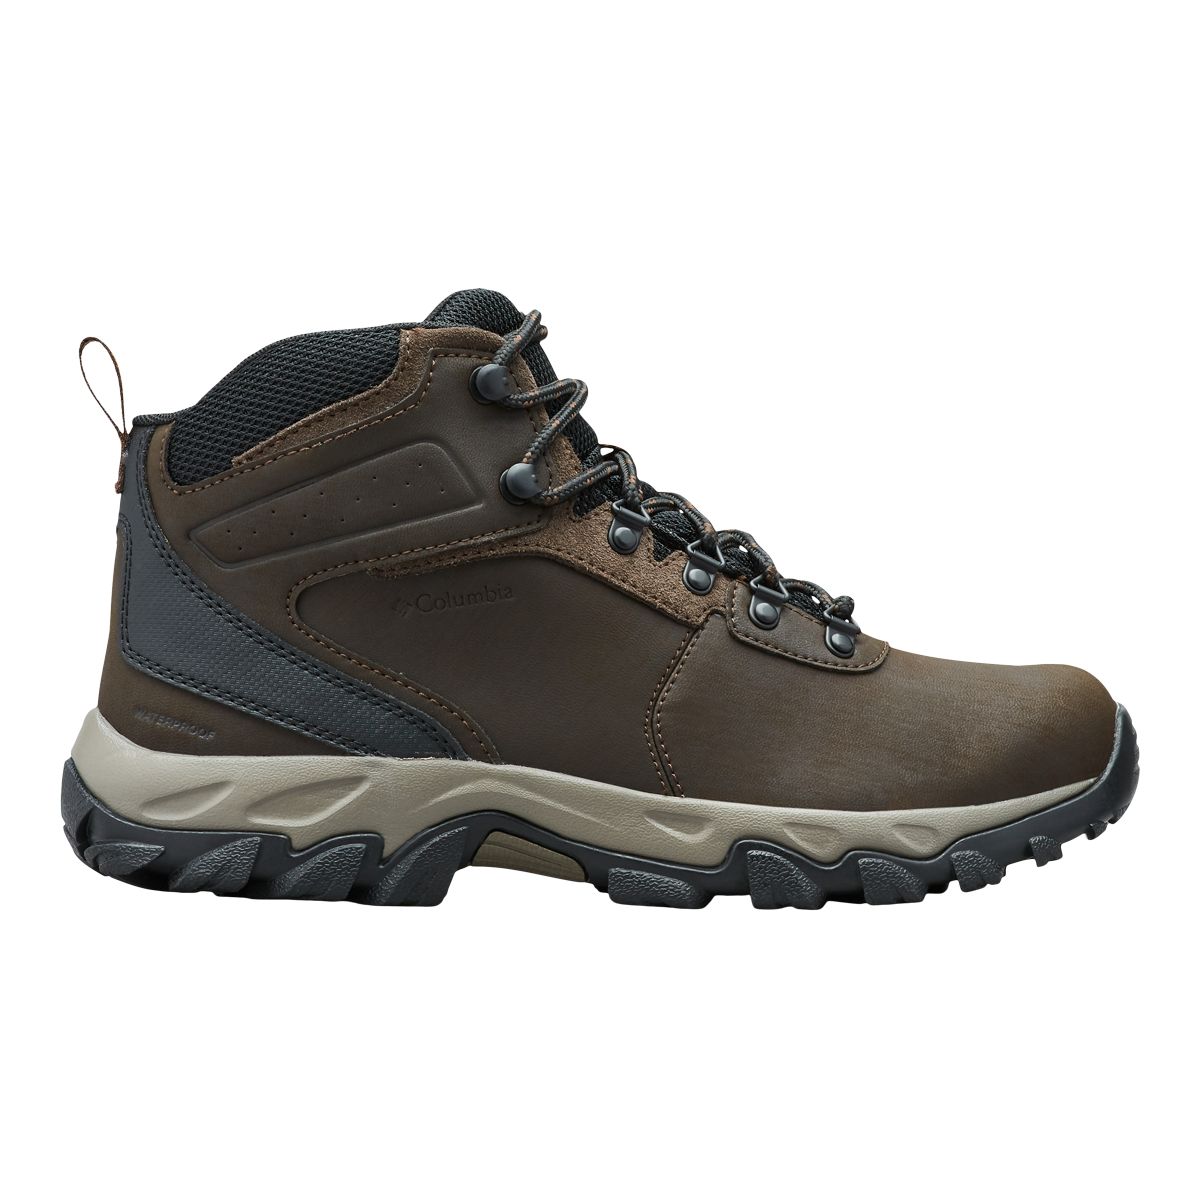 Image of Columbia Men's Newton Ridge Plus II Waterproof Leather Hiking Boots